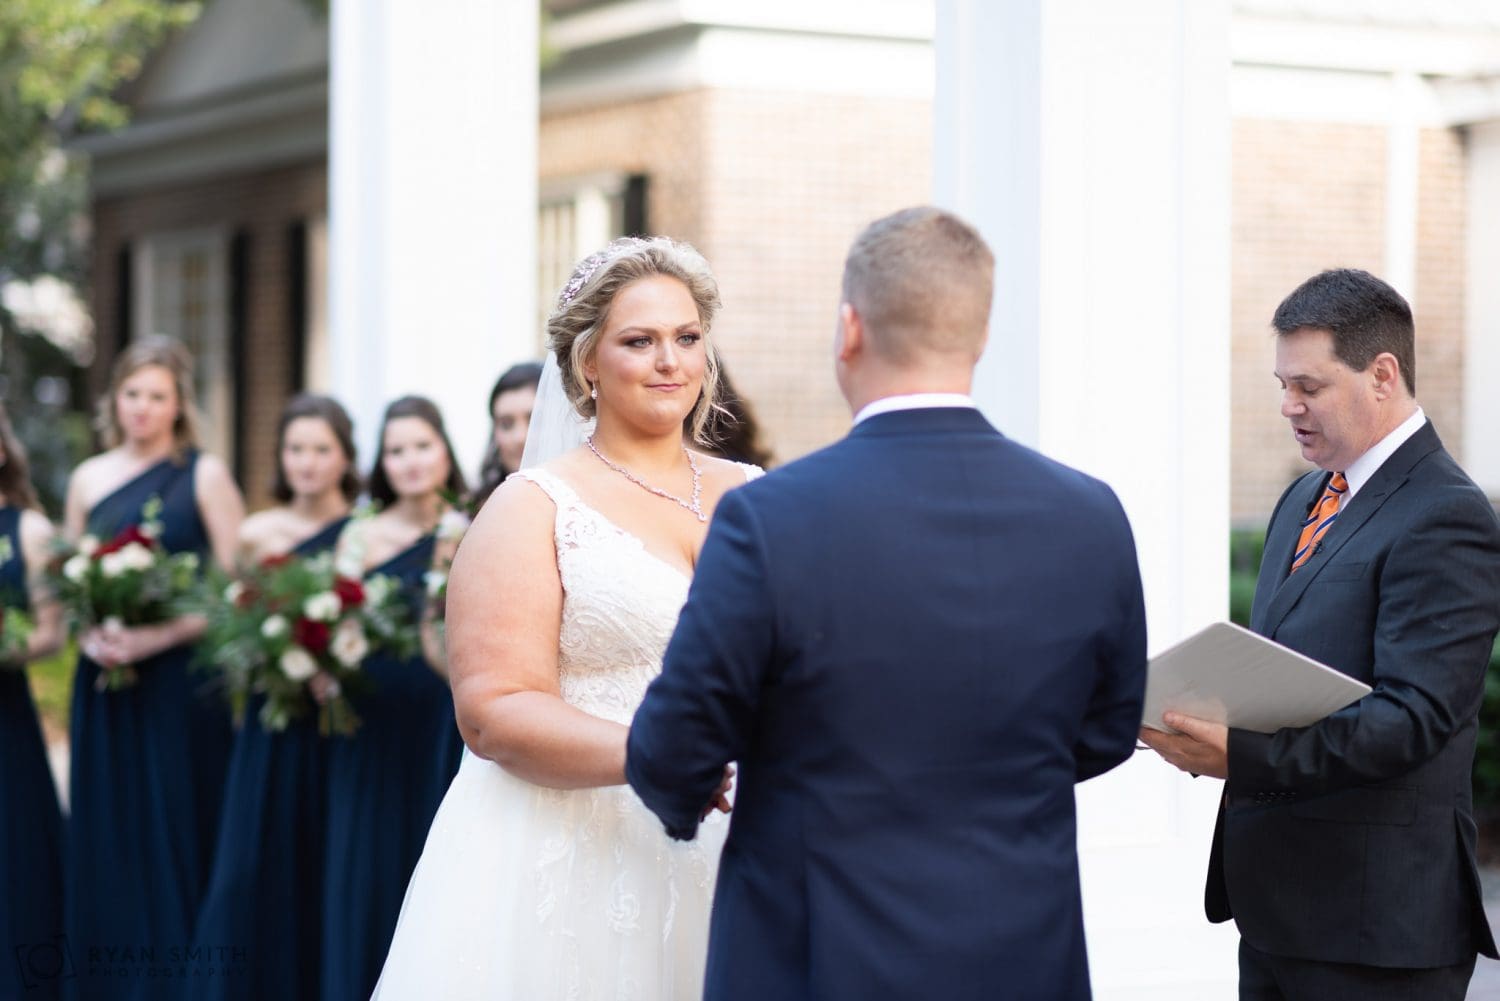 Bride looking at groom during vows